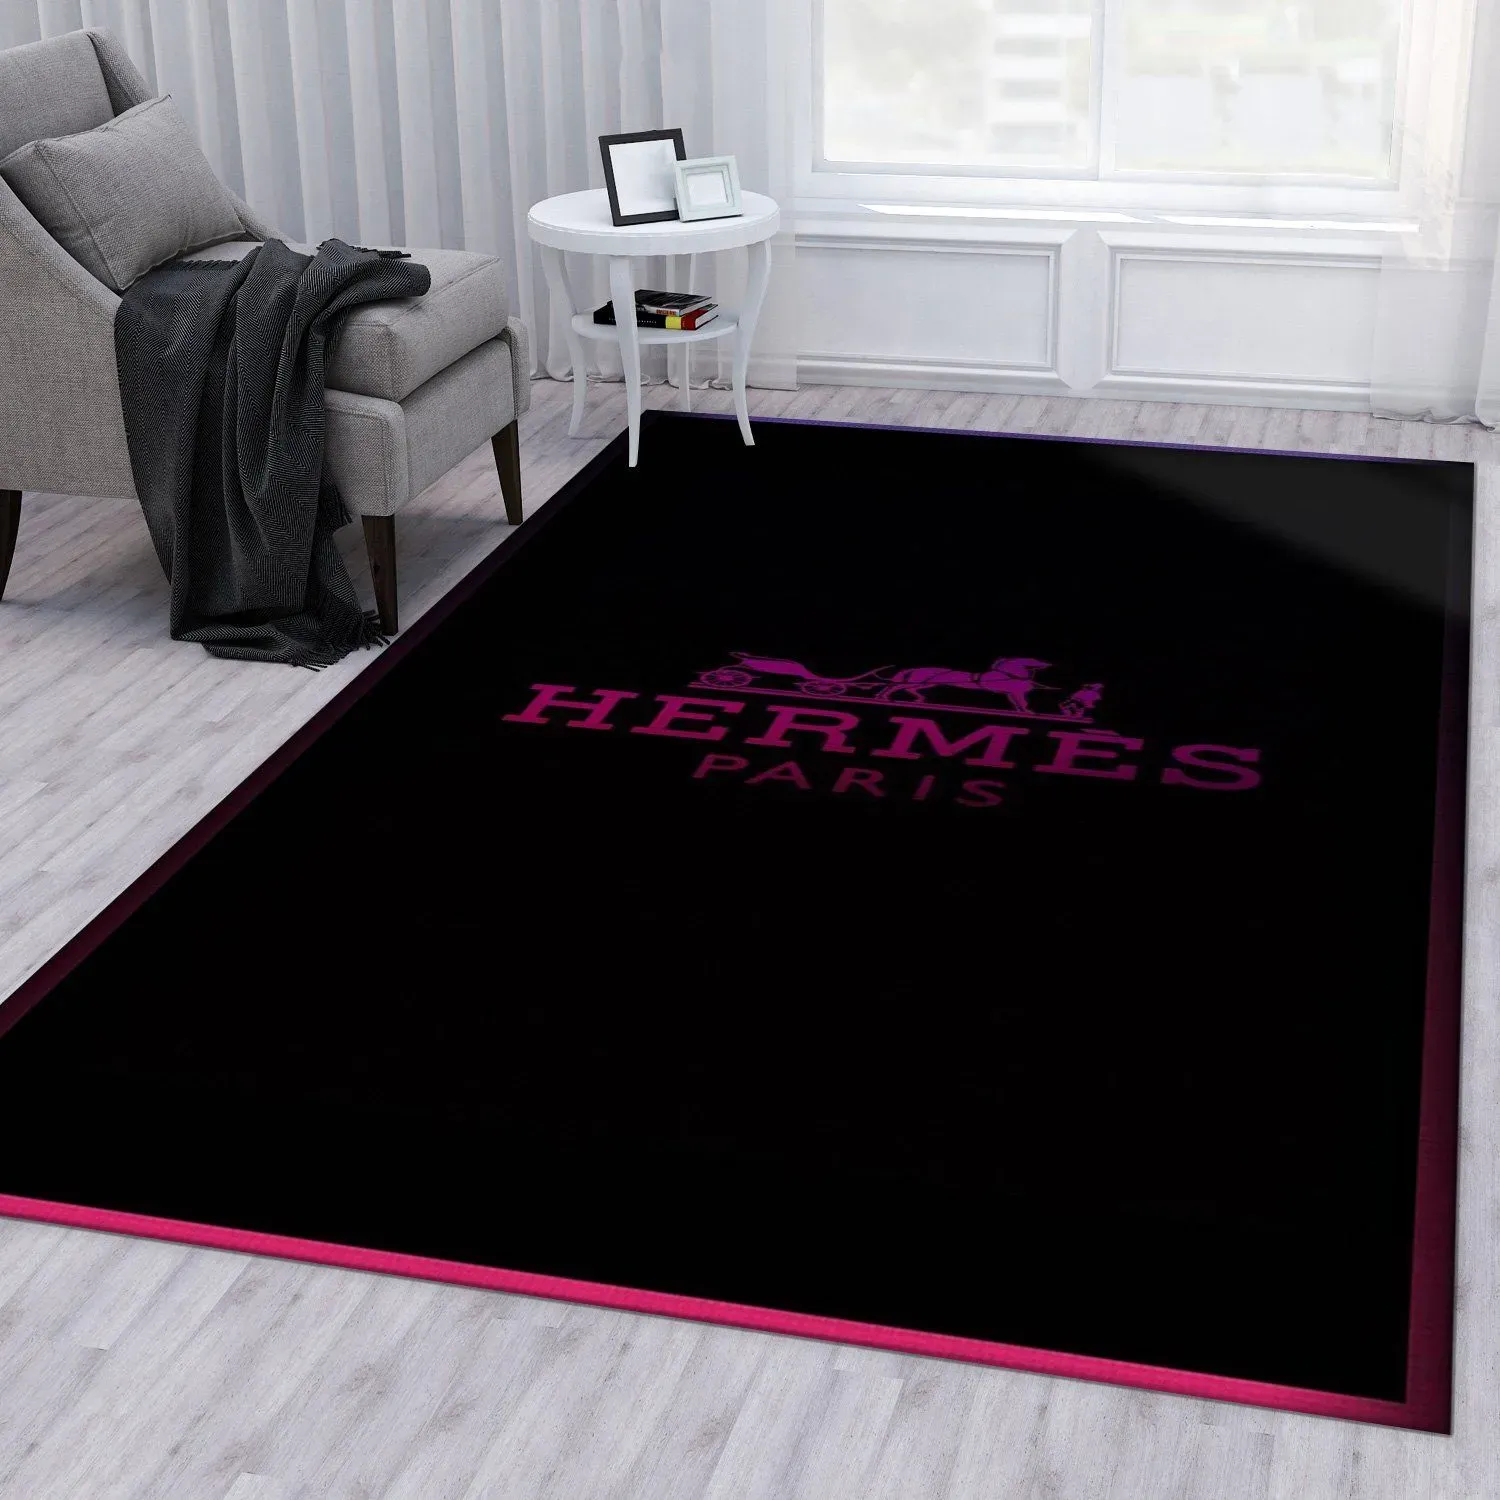 Hermes Rectangle Rug Area Carpet Luxury Home Decor Door Mat Fashion Brand